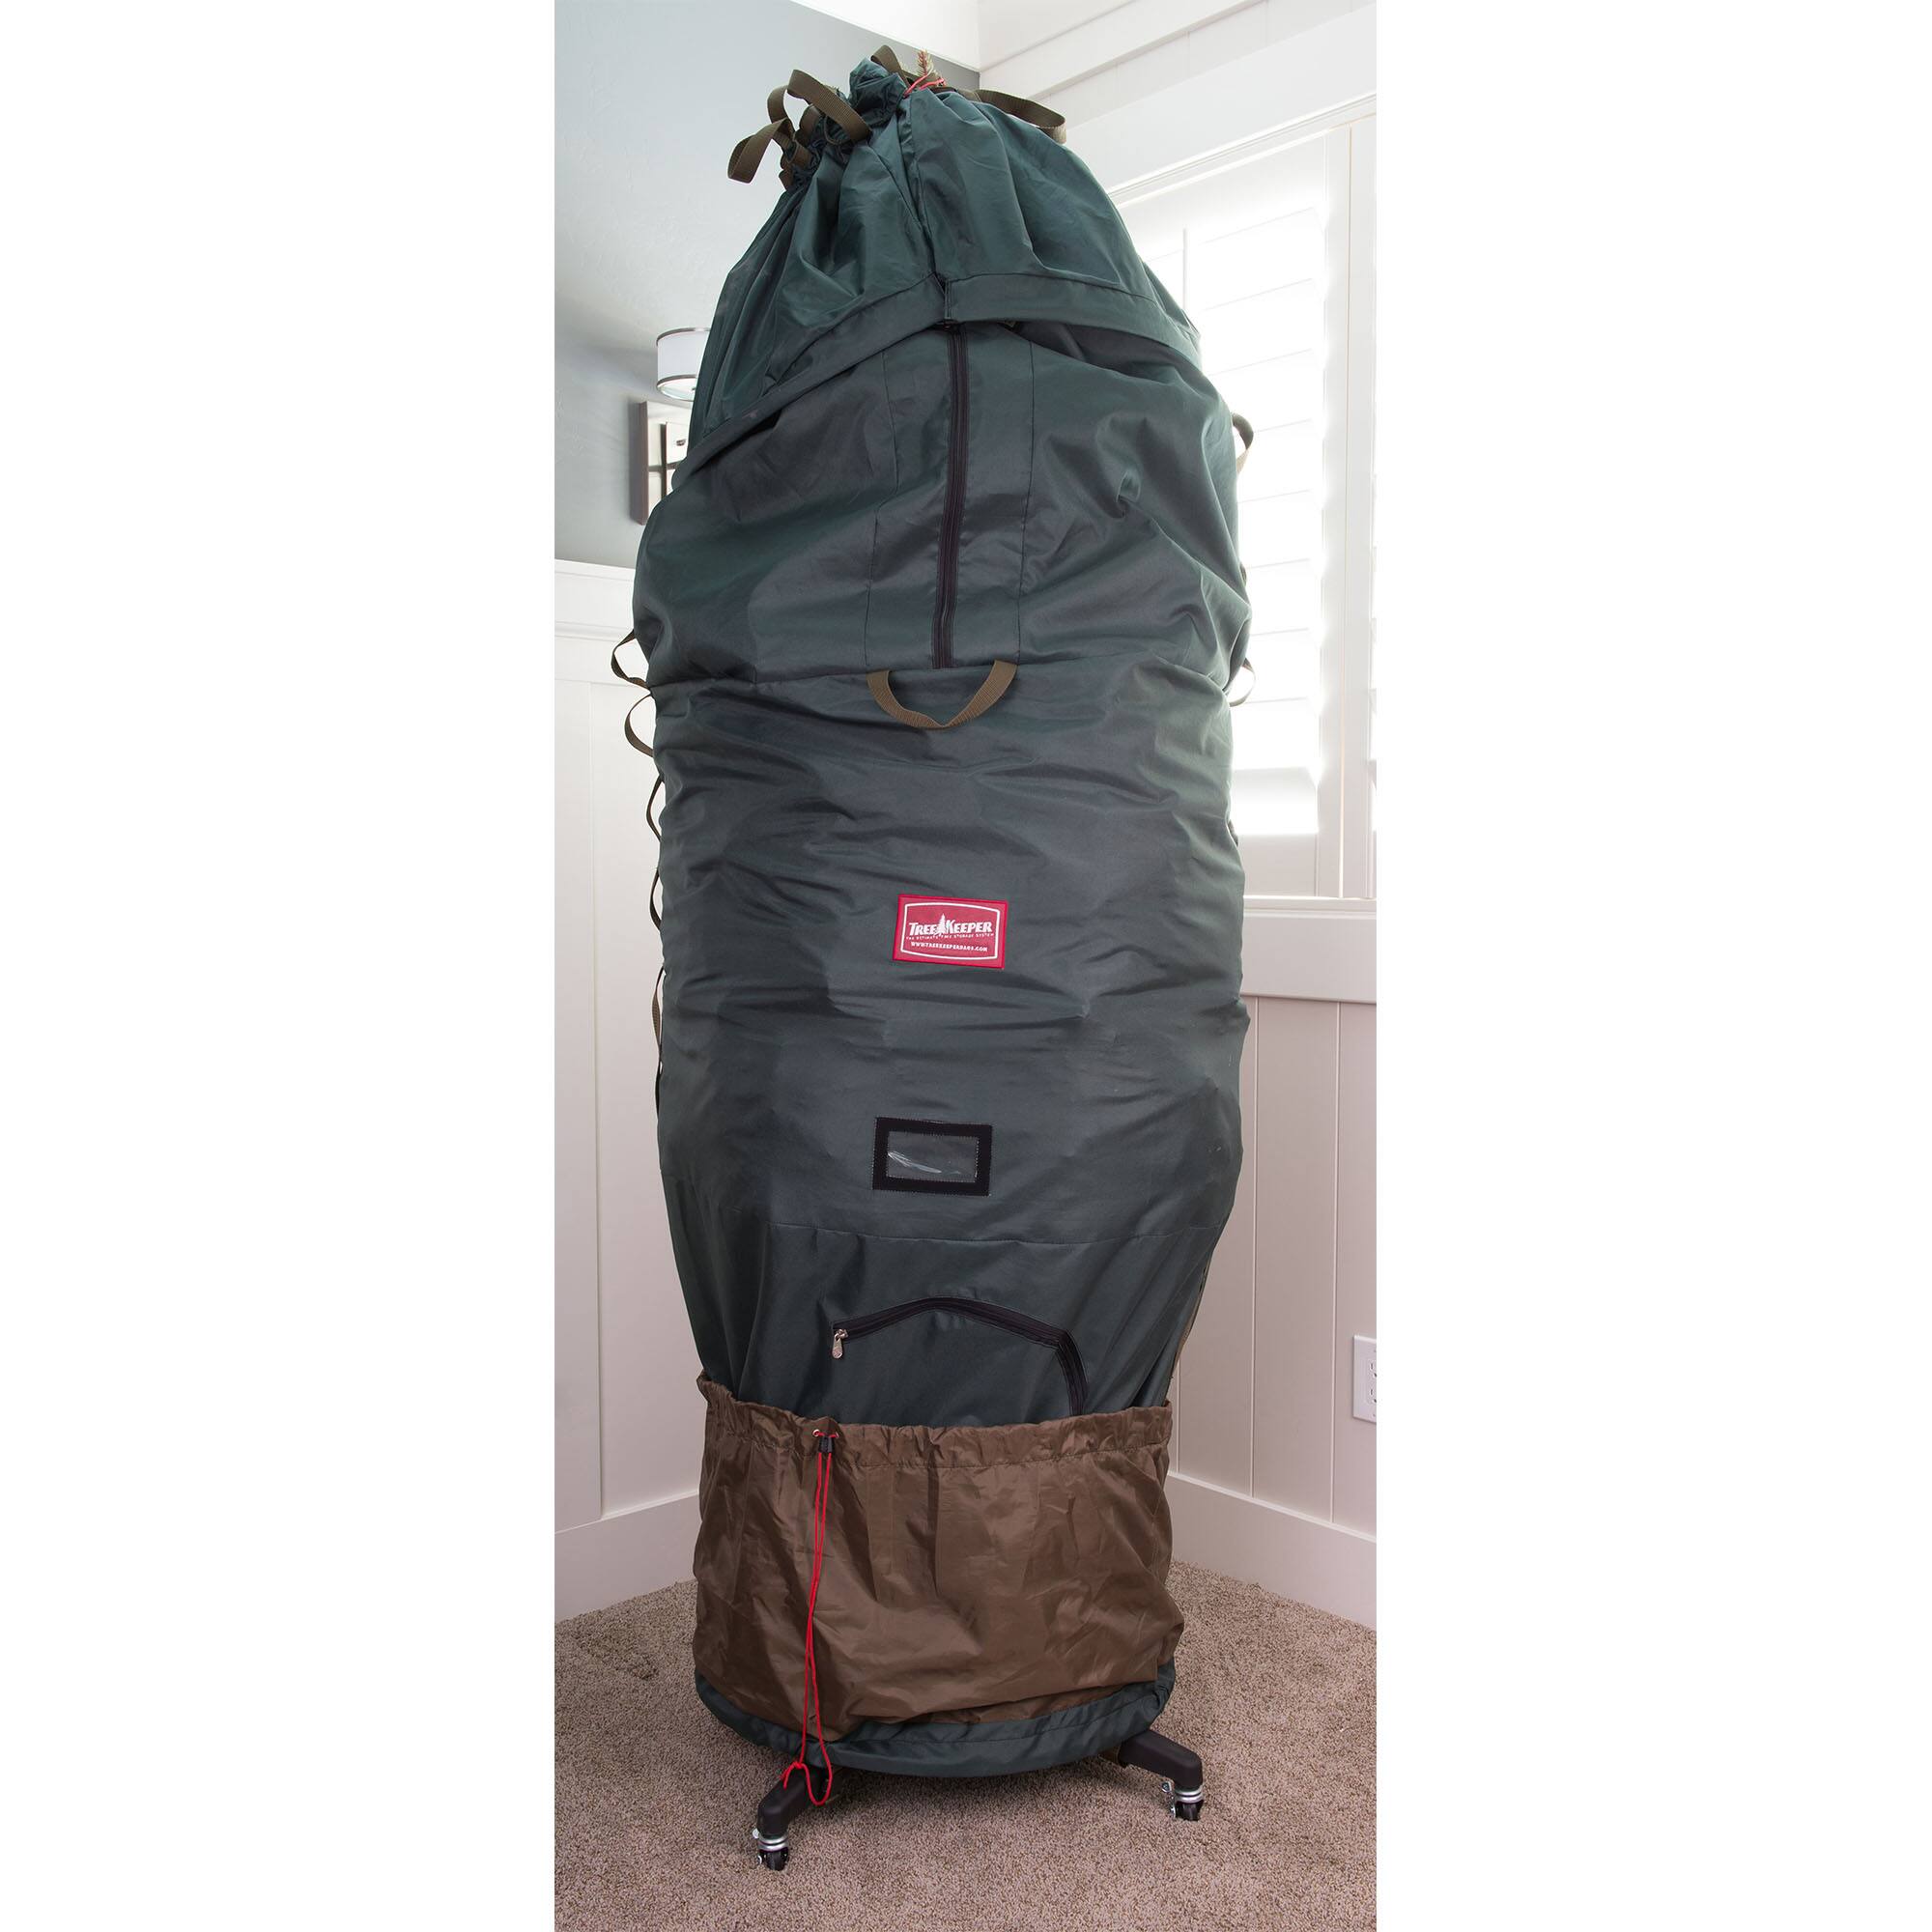 TreeKeeper Large Upright Tree Storage Bag with Wheels